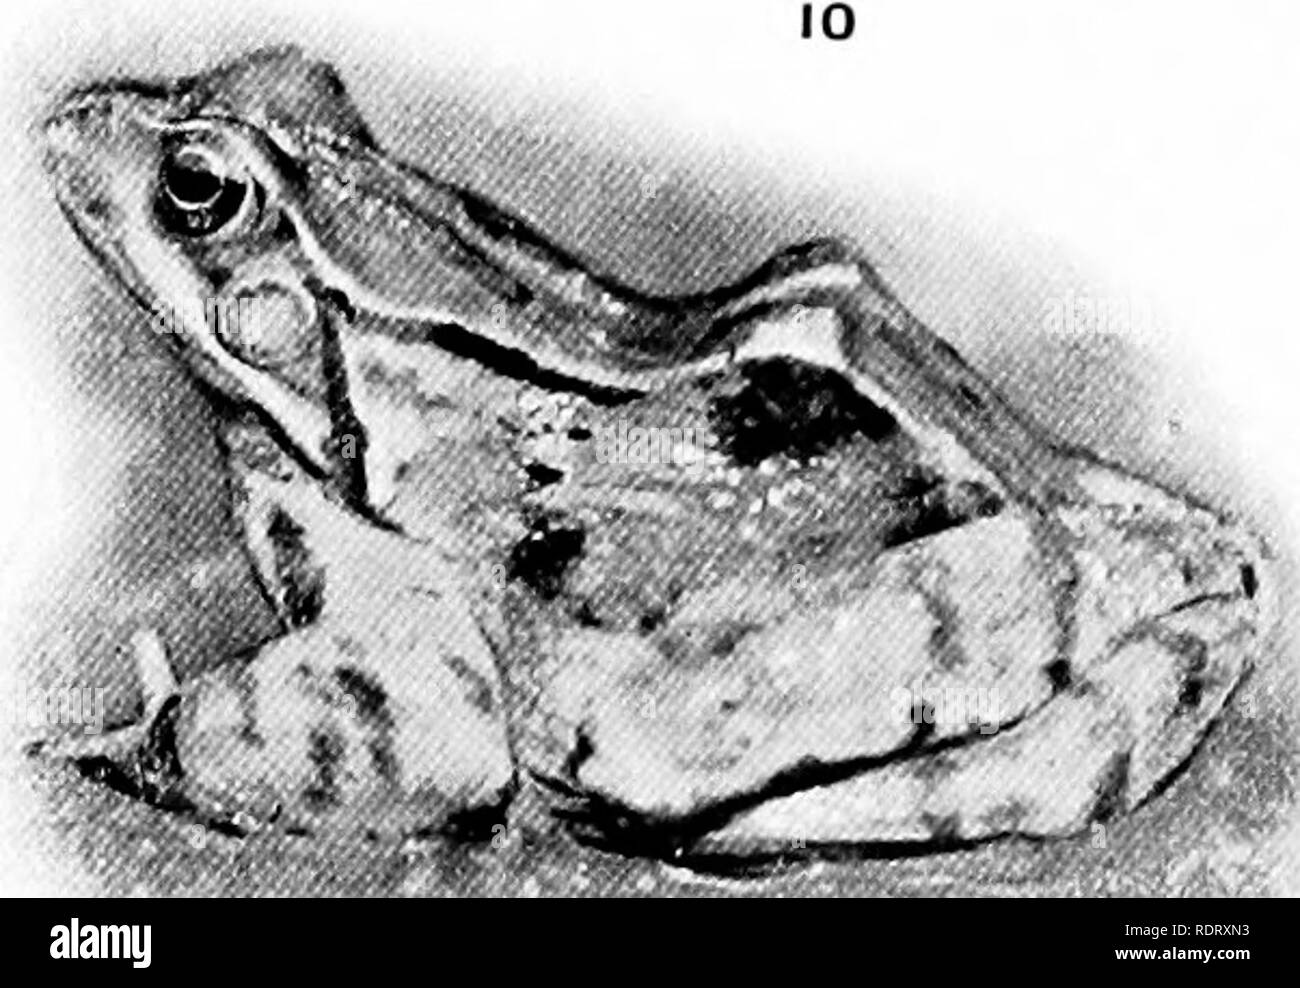 Frog development tadpole egg Black and White Stock Photos & Images - Alamy